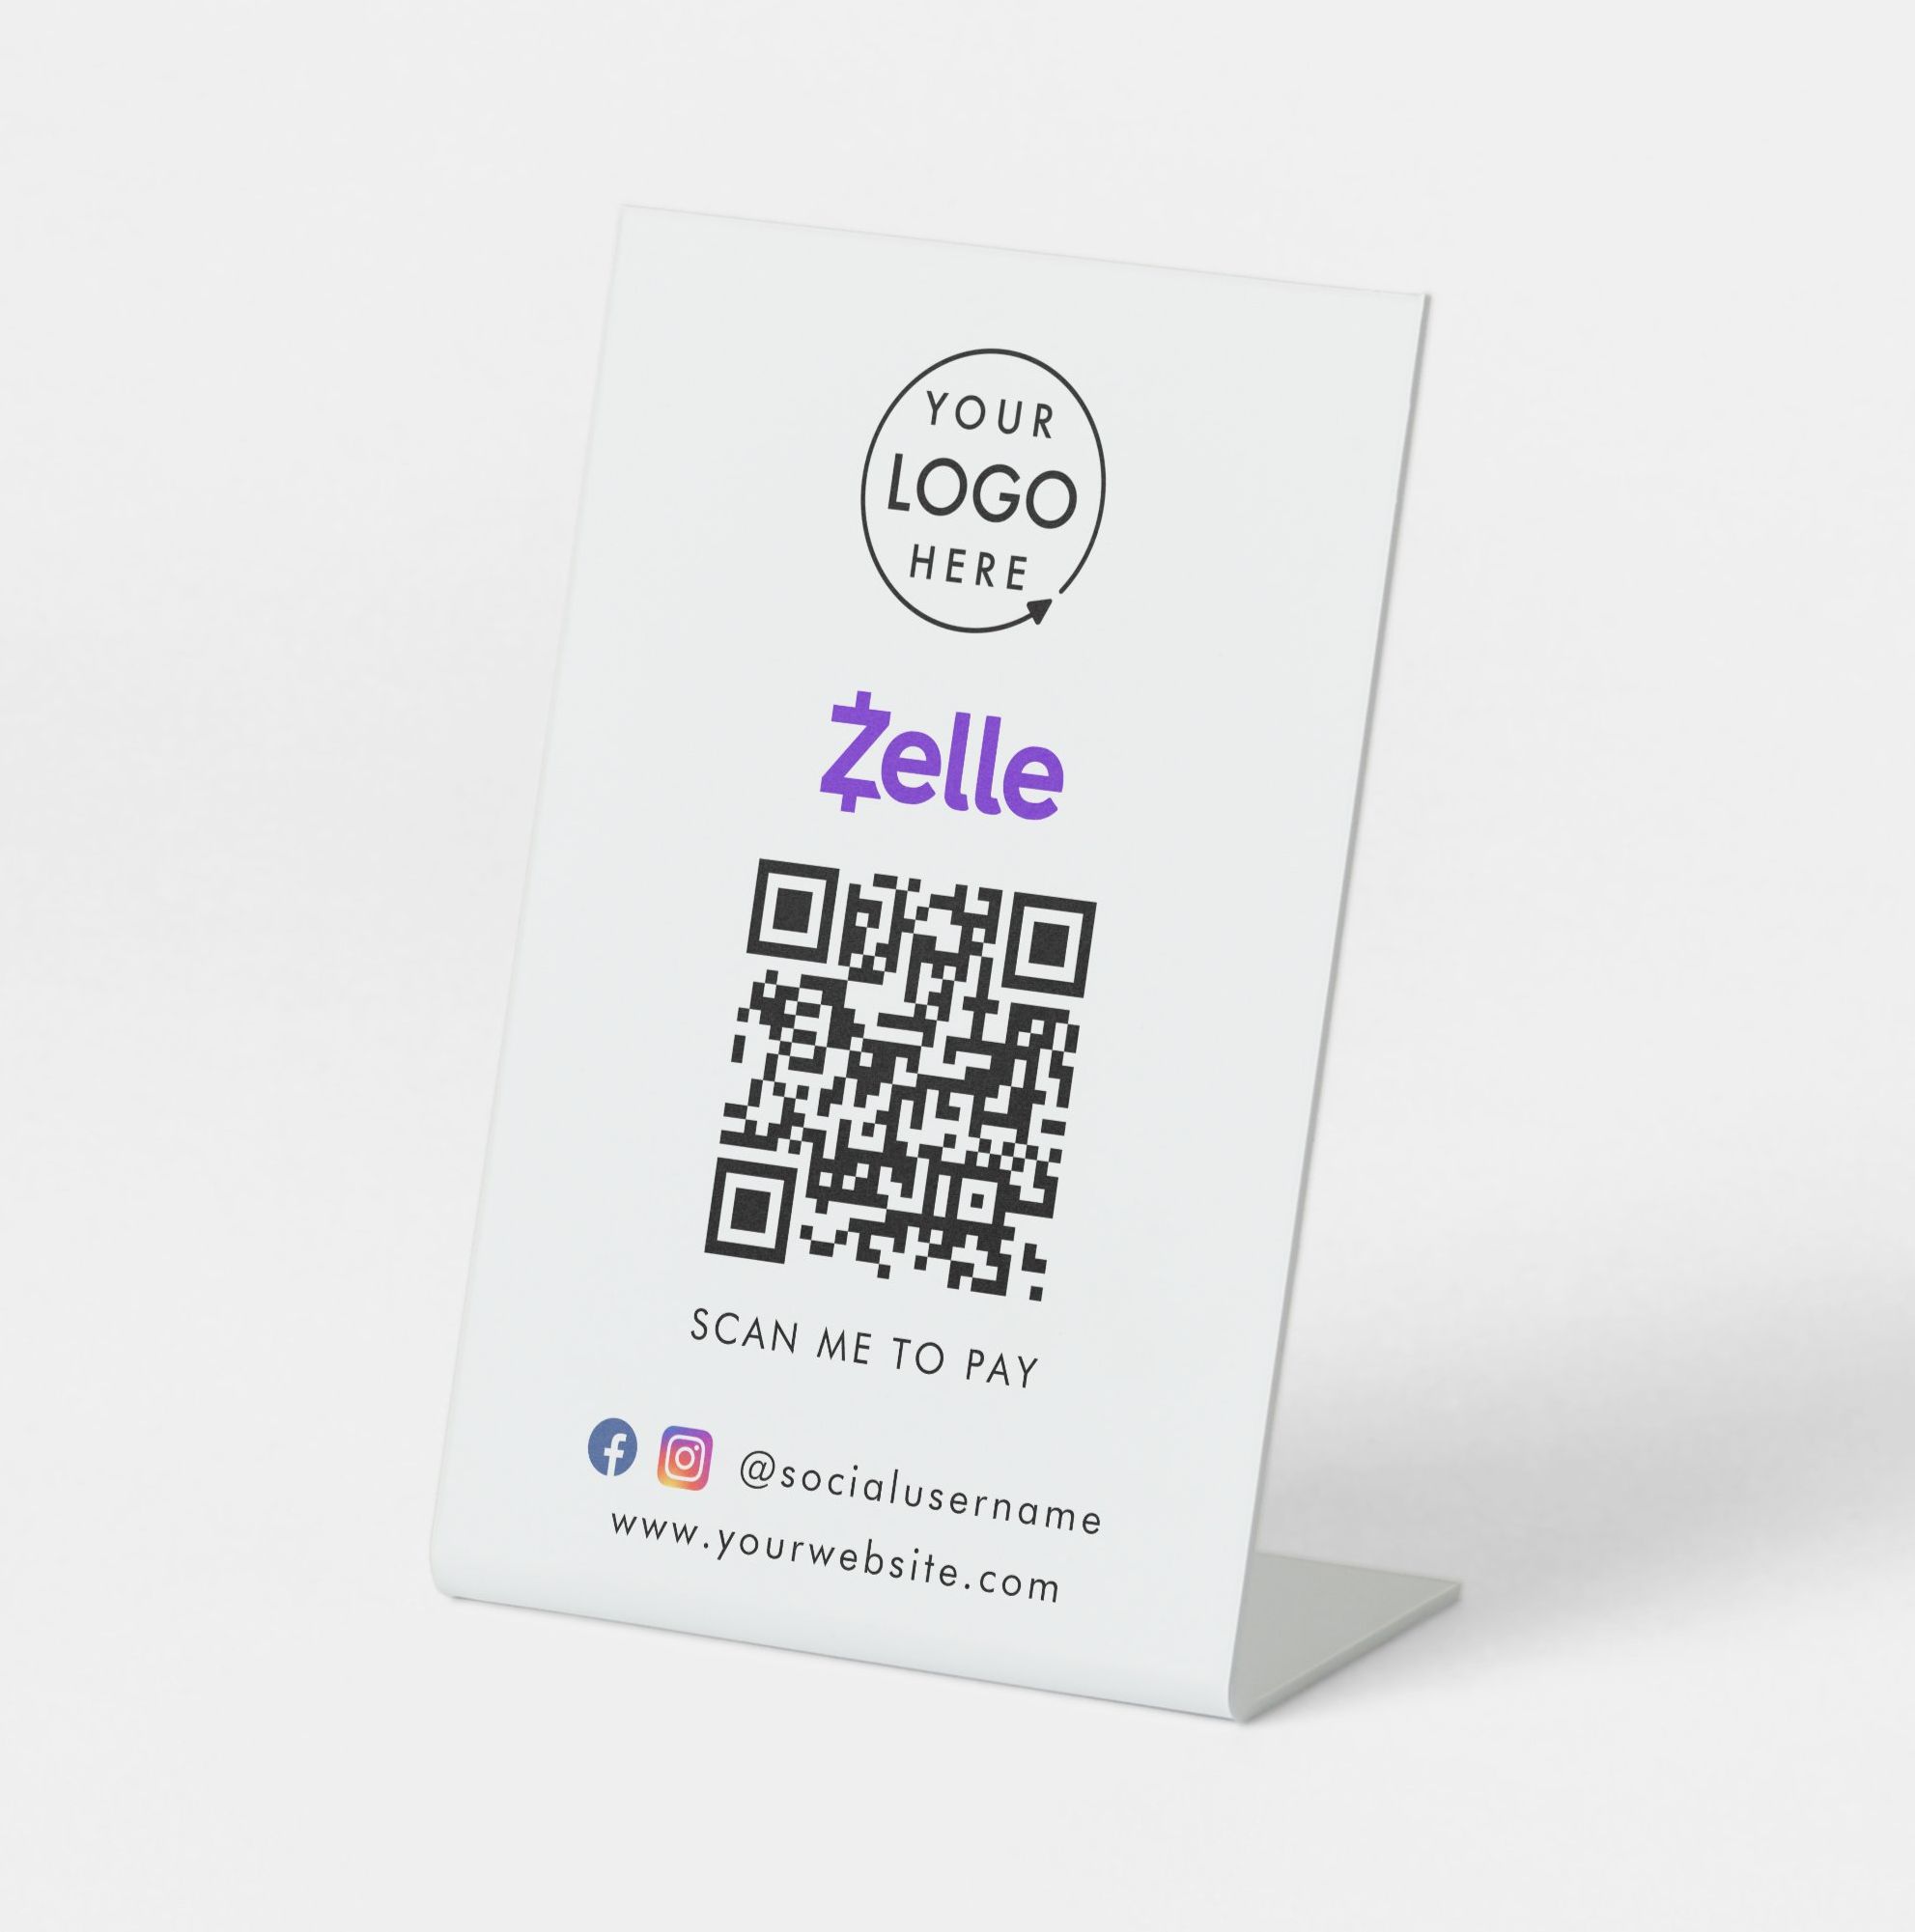 Zelle QR Code Payment | Scan to Pay Business Logo Pedestal Sign